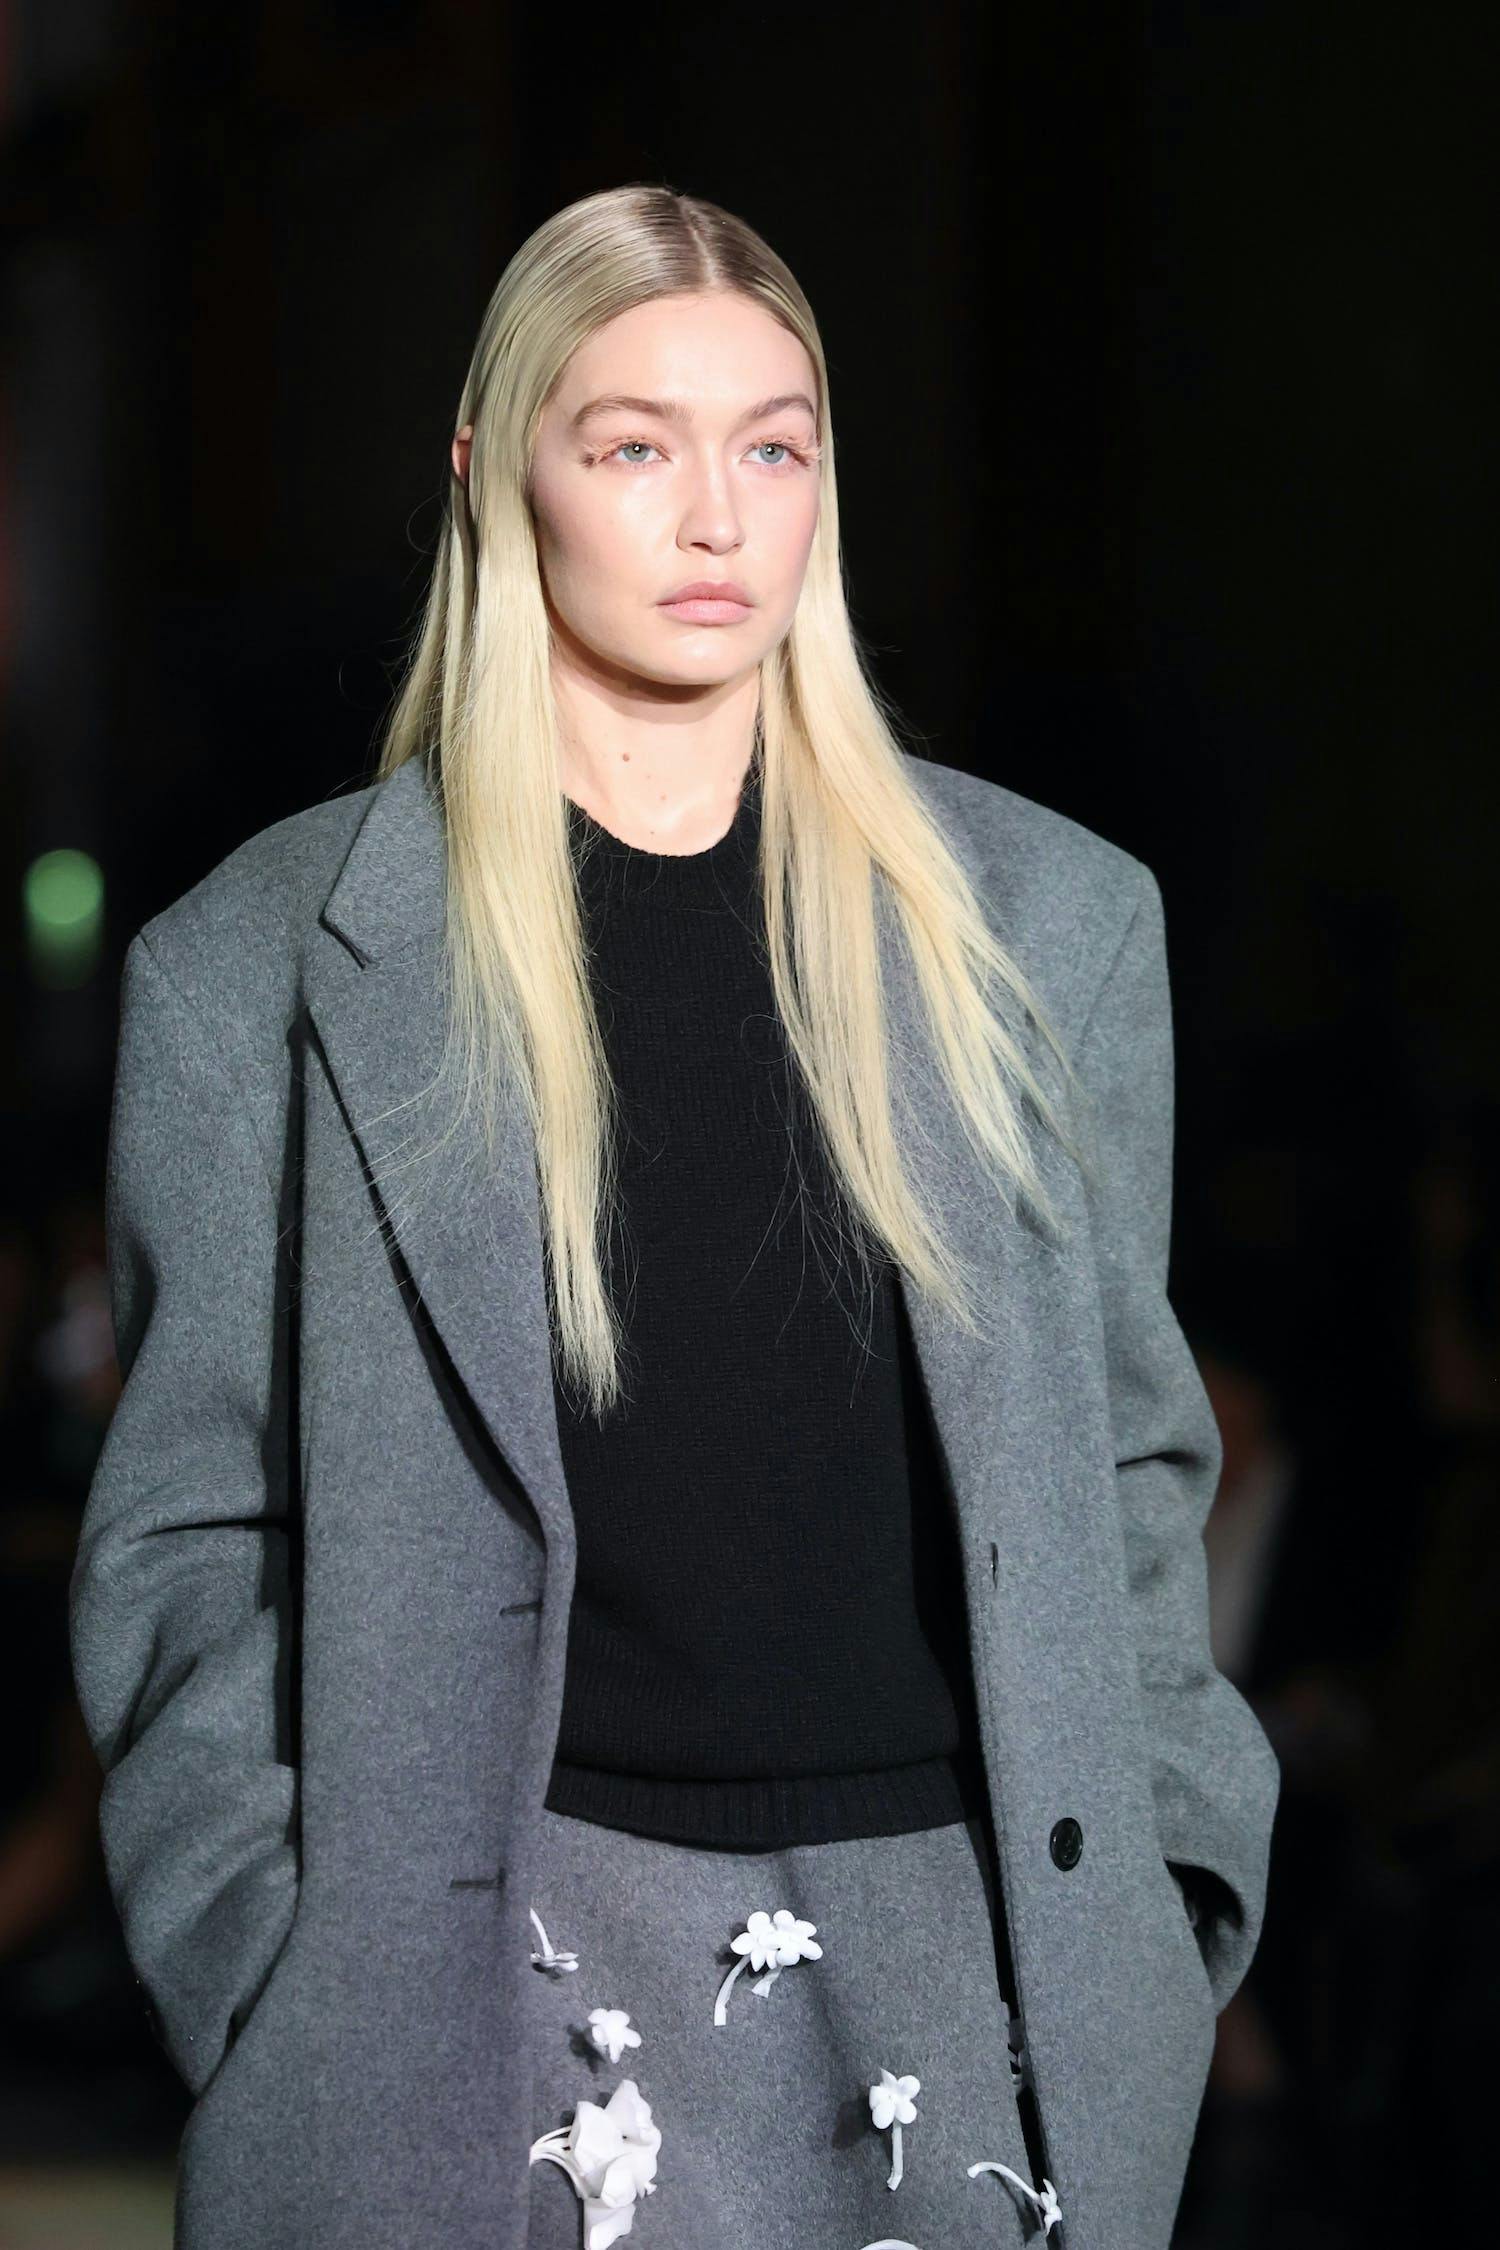 milan blonde person coat woman adult female fashion long sleeve jacket formal wear